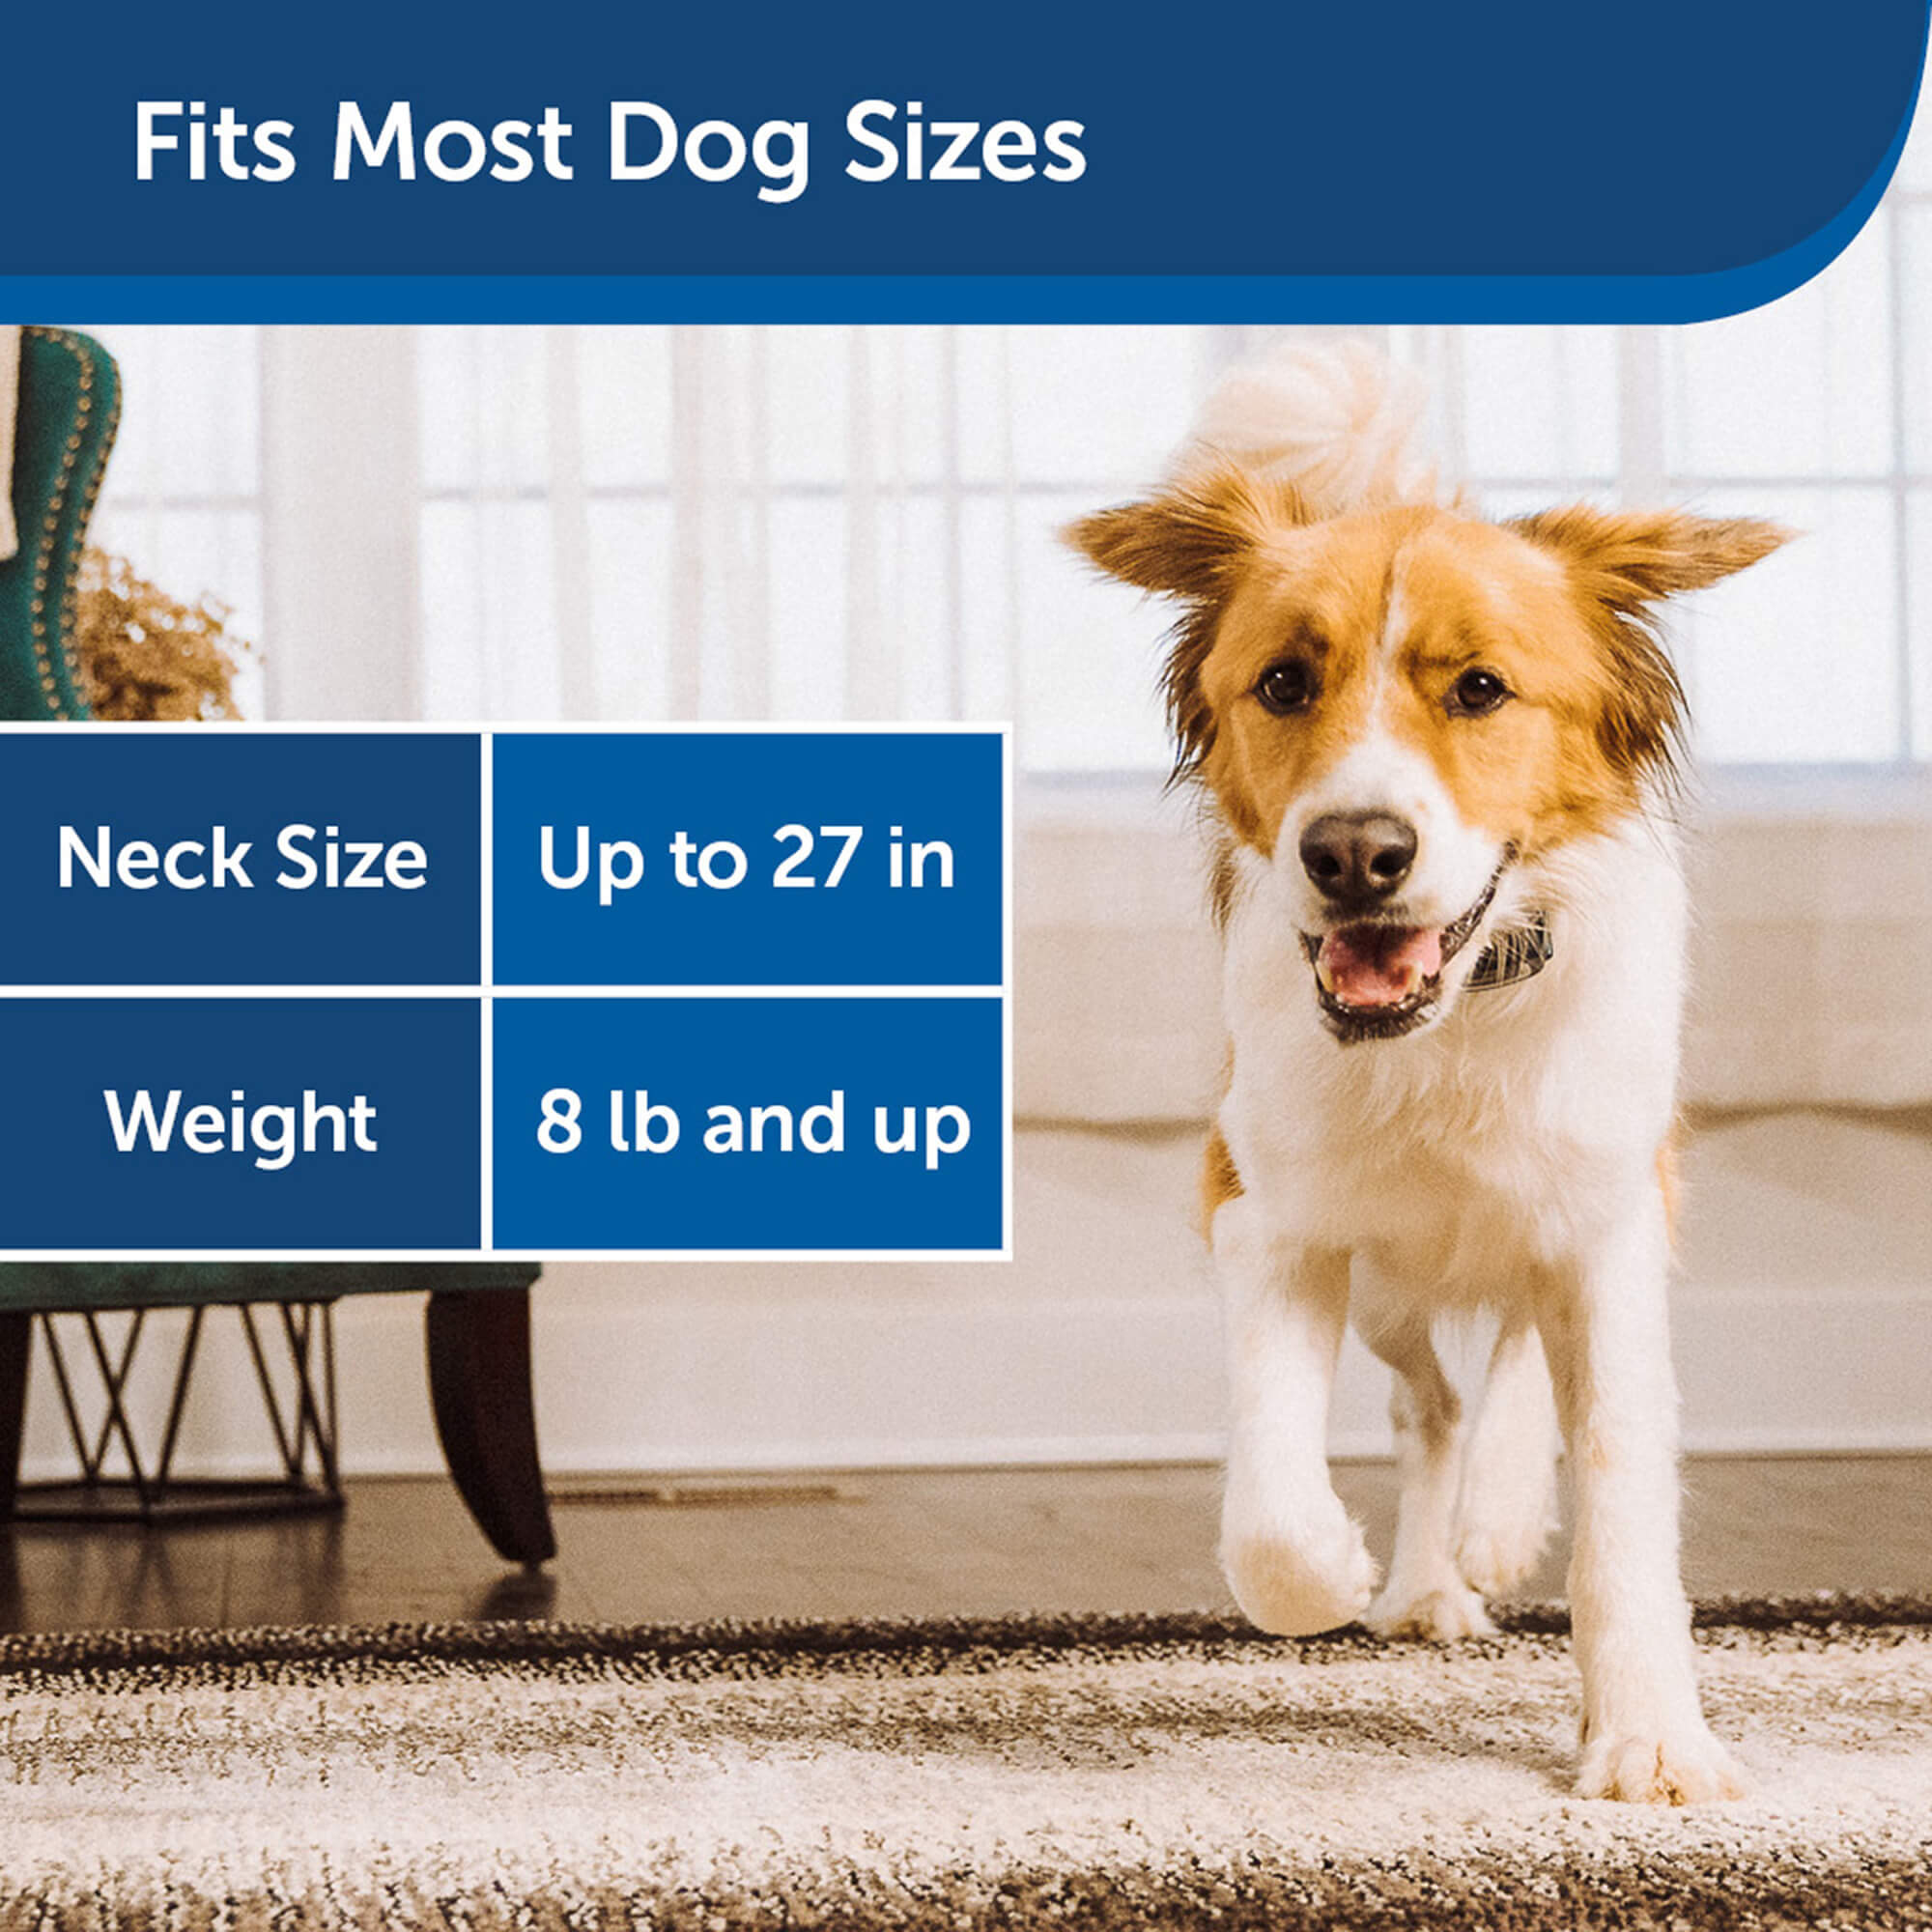 Fits most dog sizes